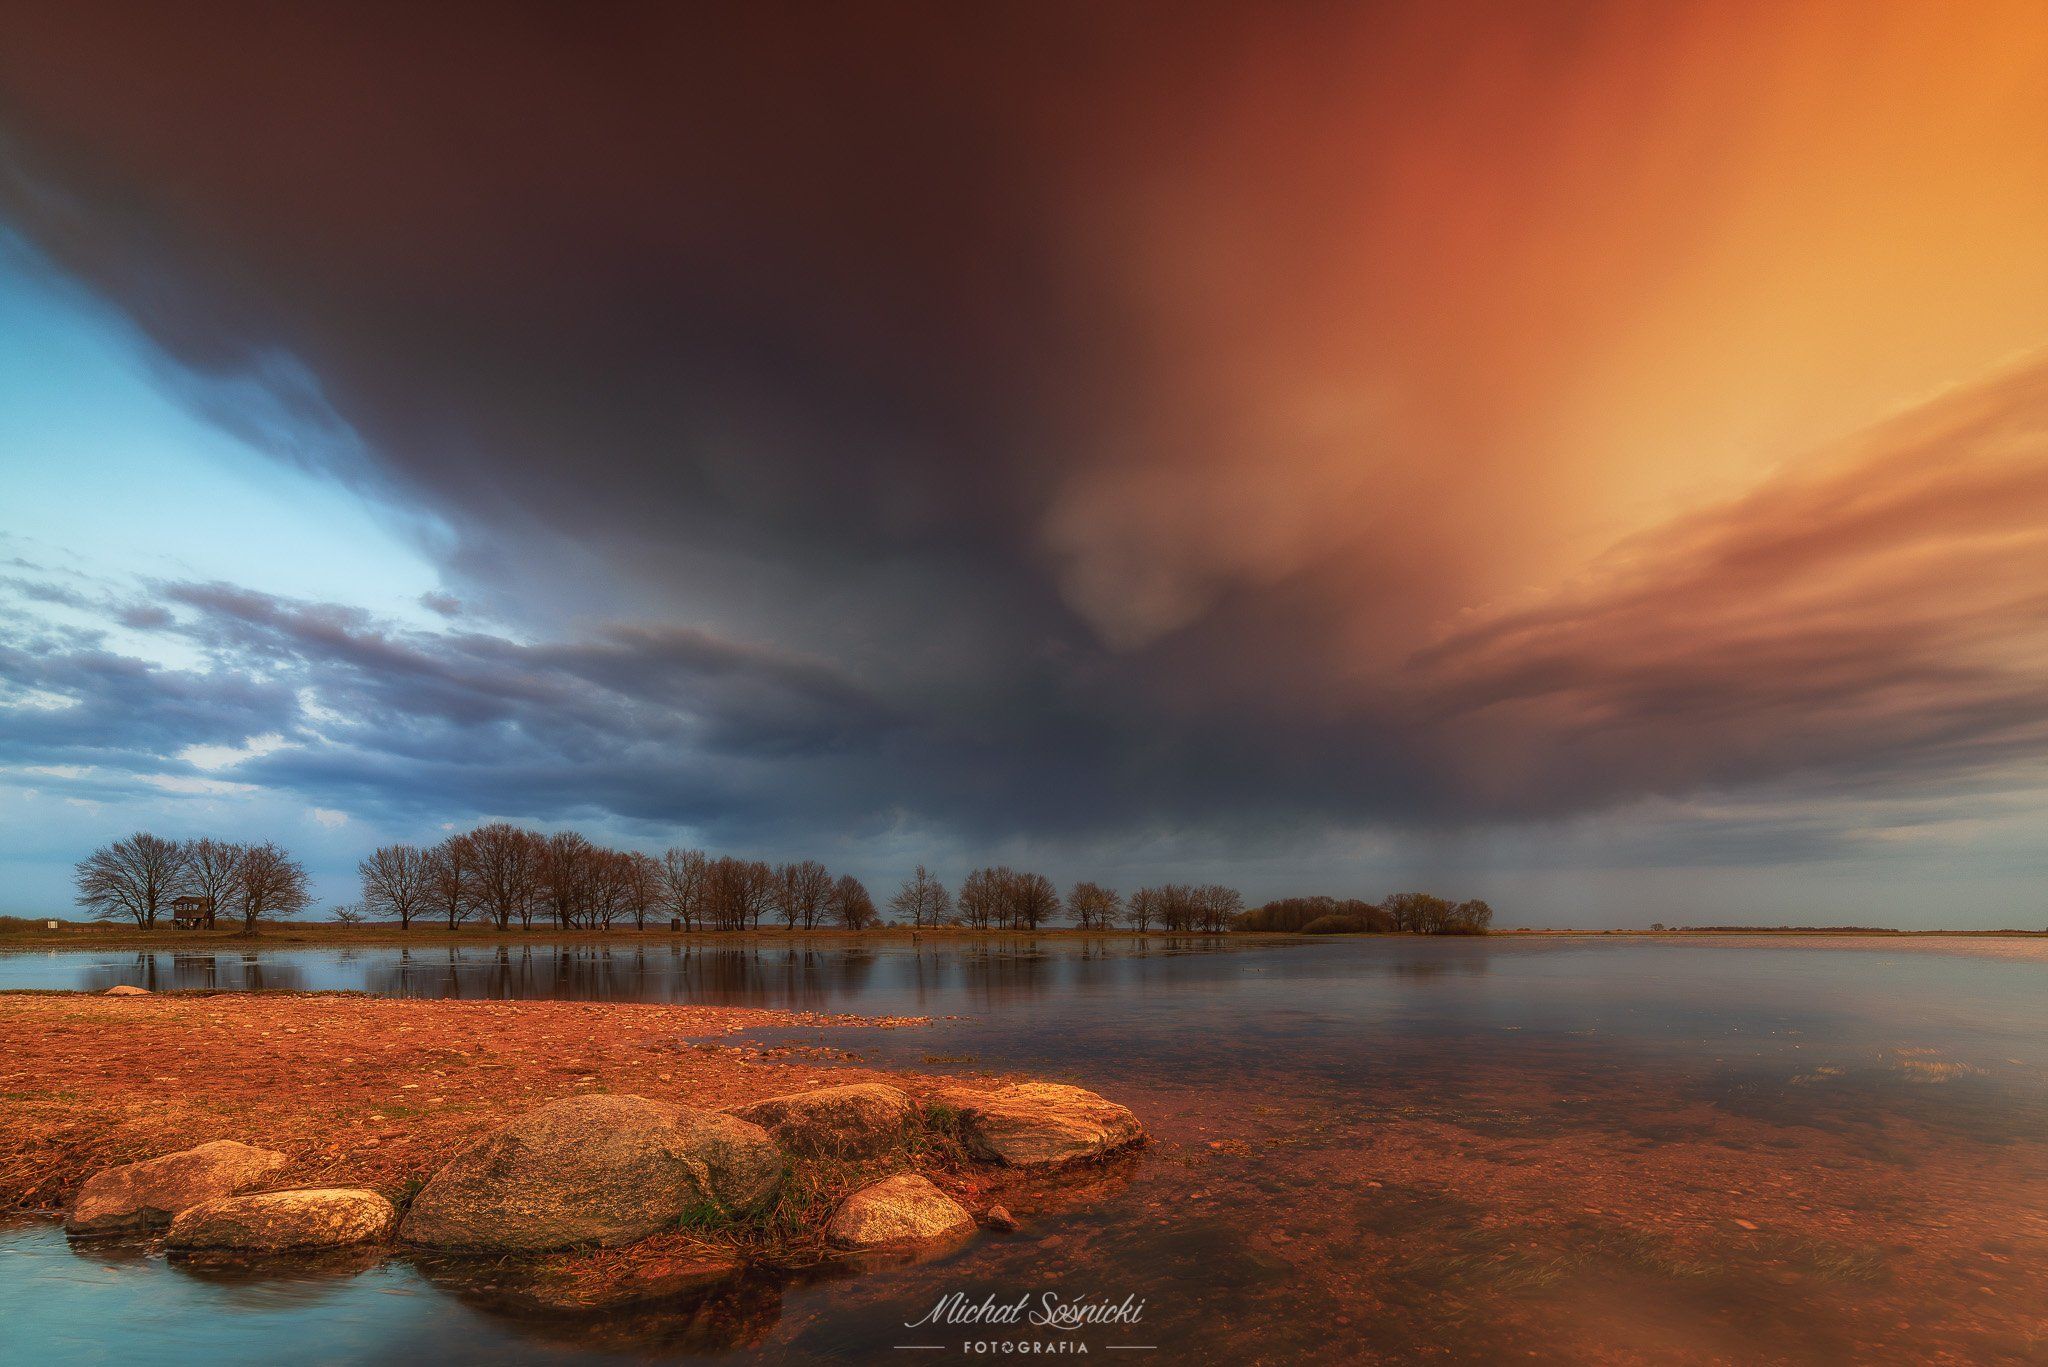 #poland #podlasie #water #sky #storm #clouds #magic #benro #benq #pentax, Michał Sośnicki